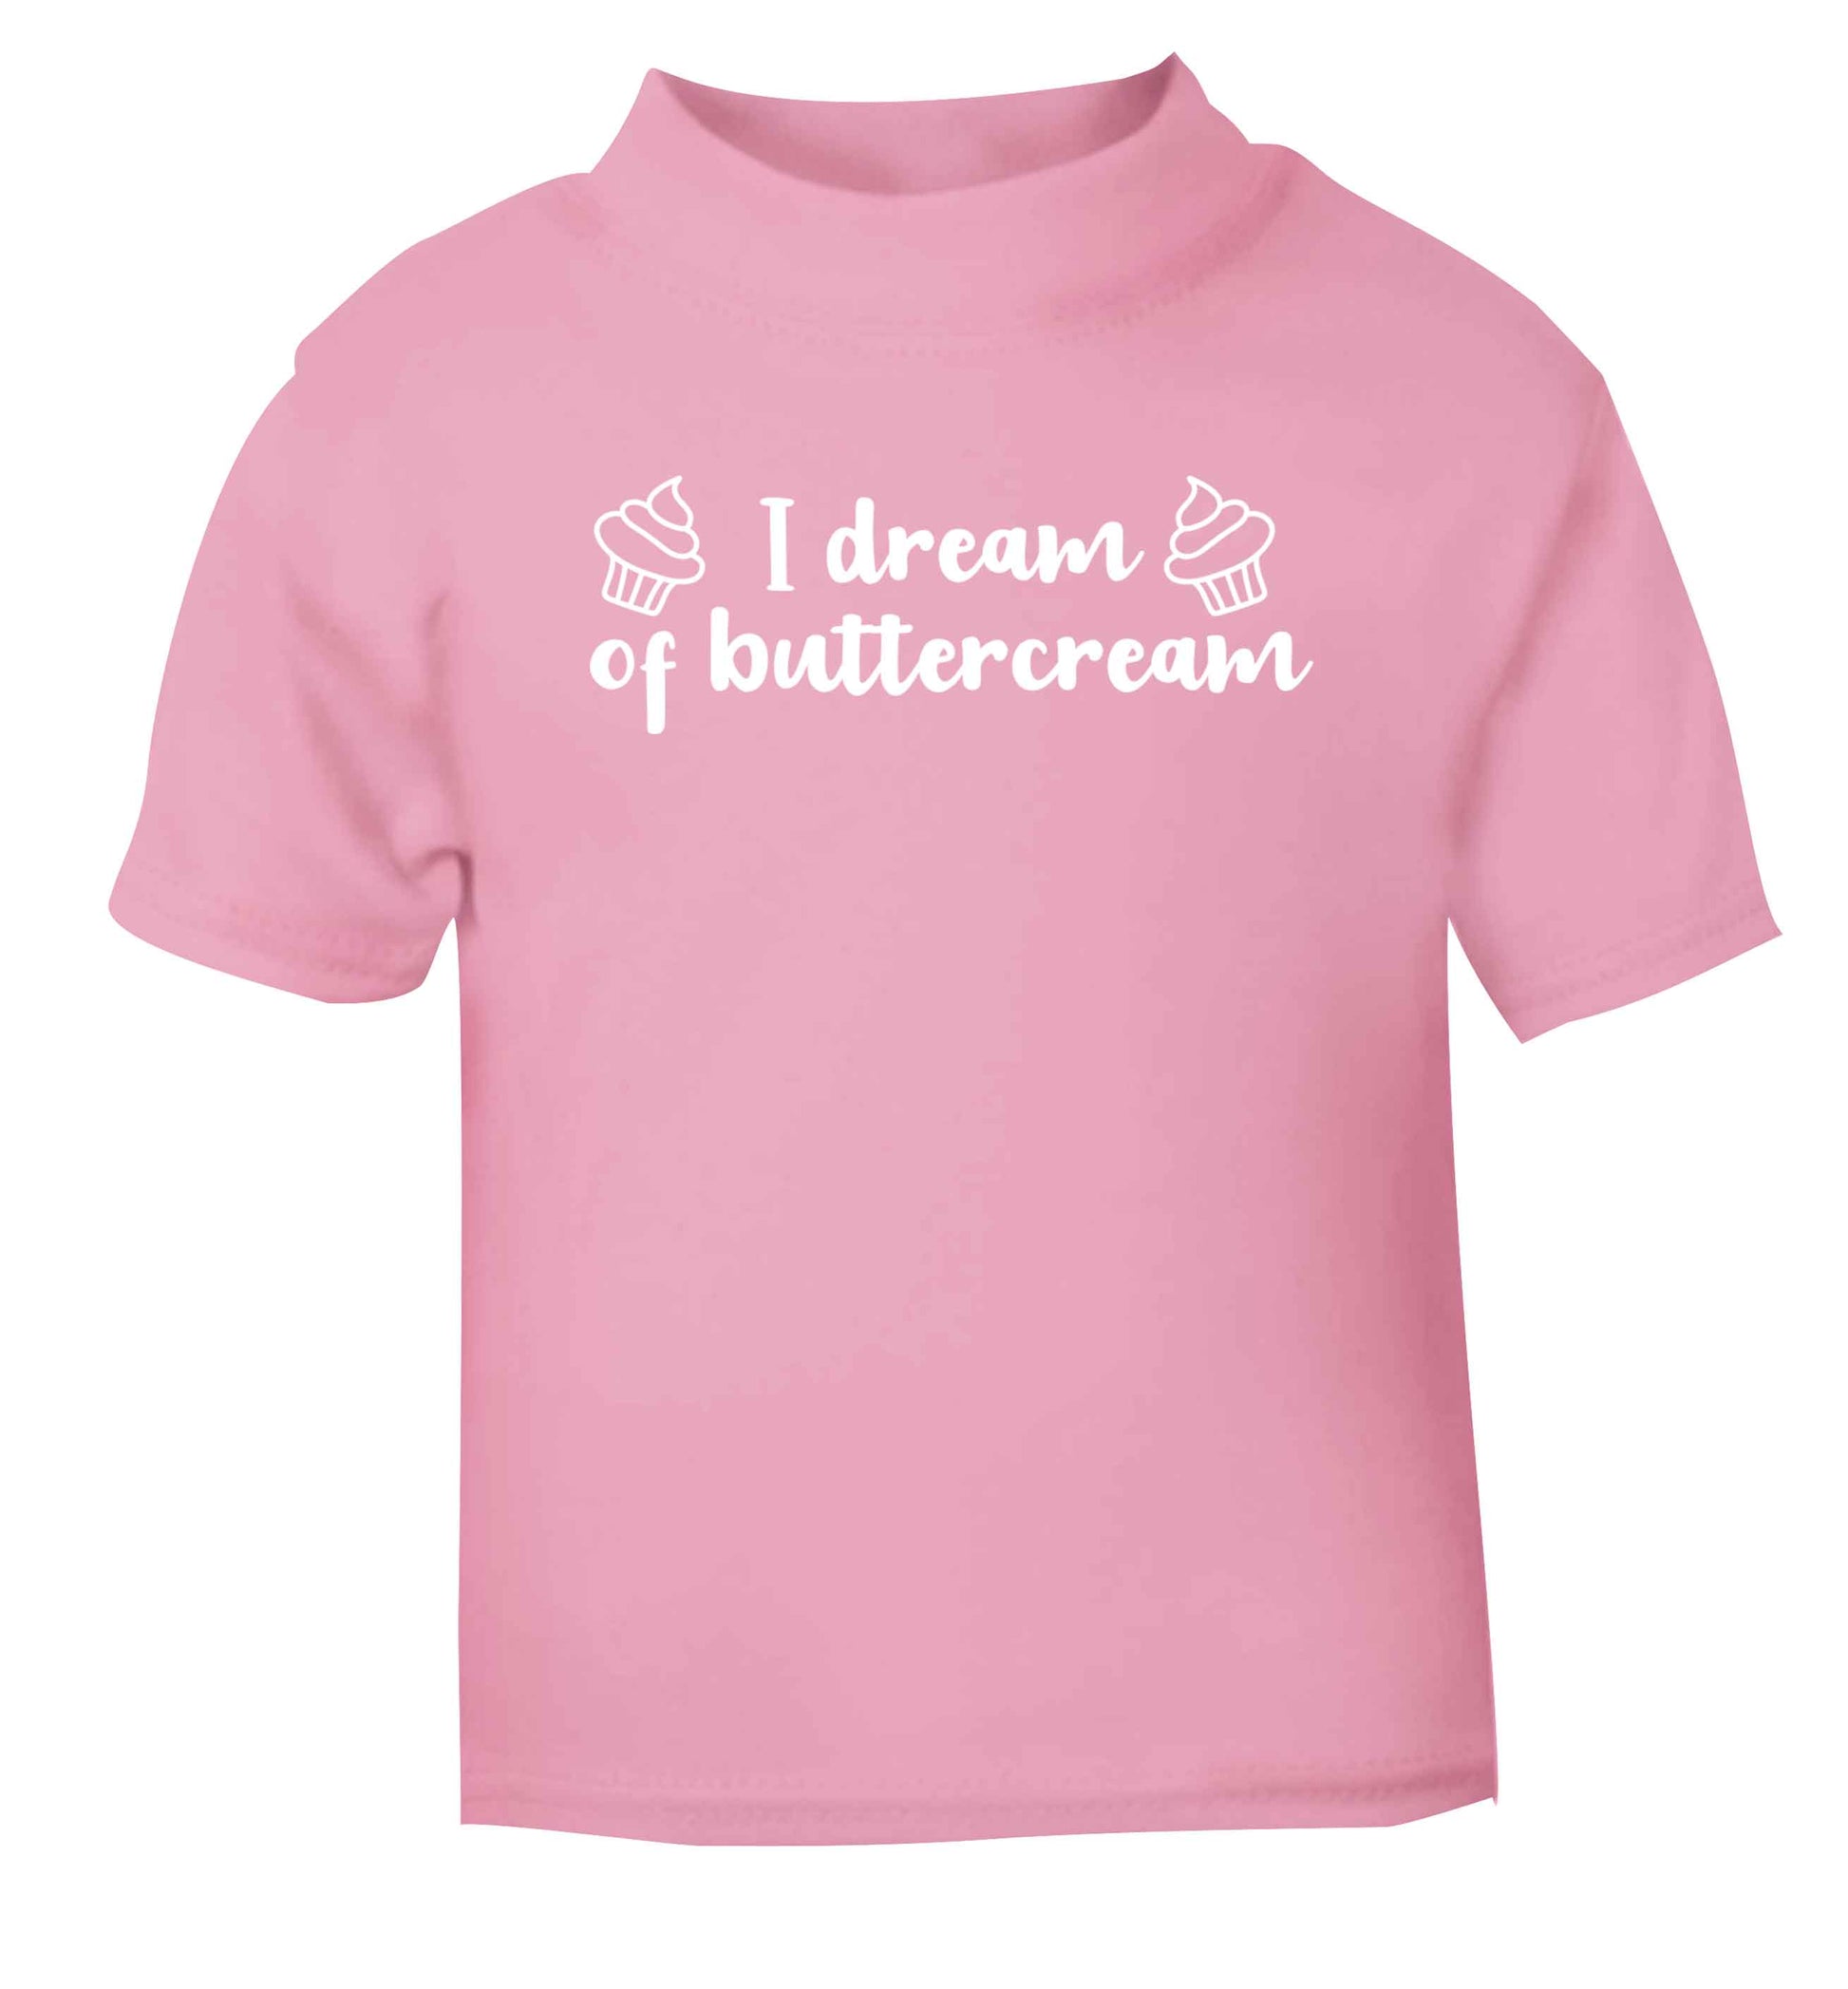 I dream of buttercream light pink Baby Toddler Tshirt 2 Years